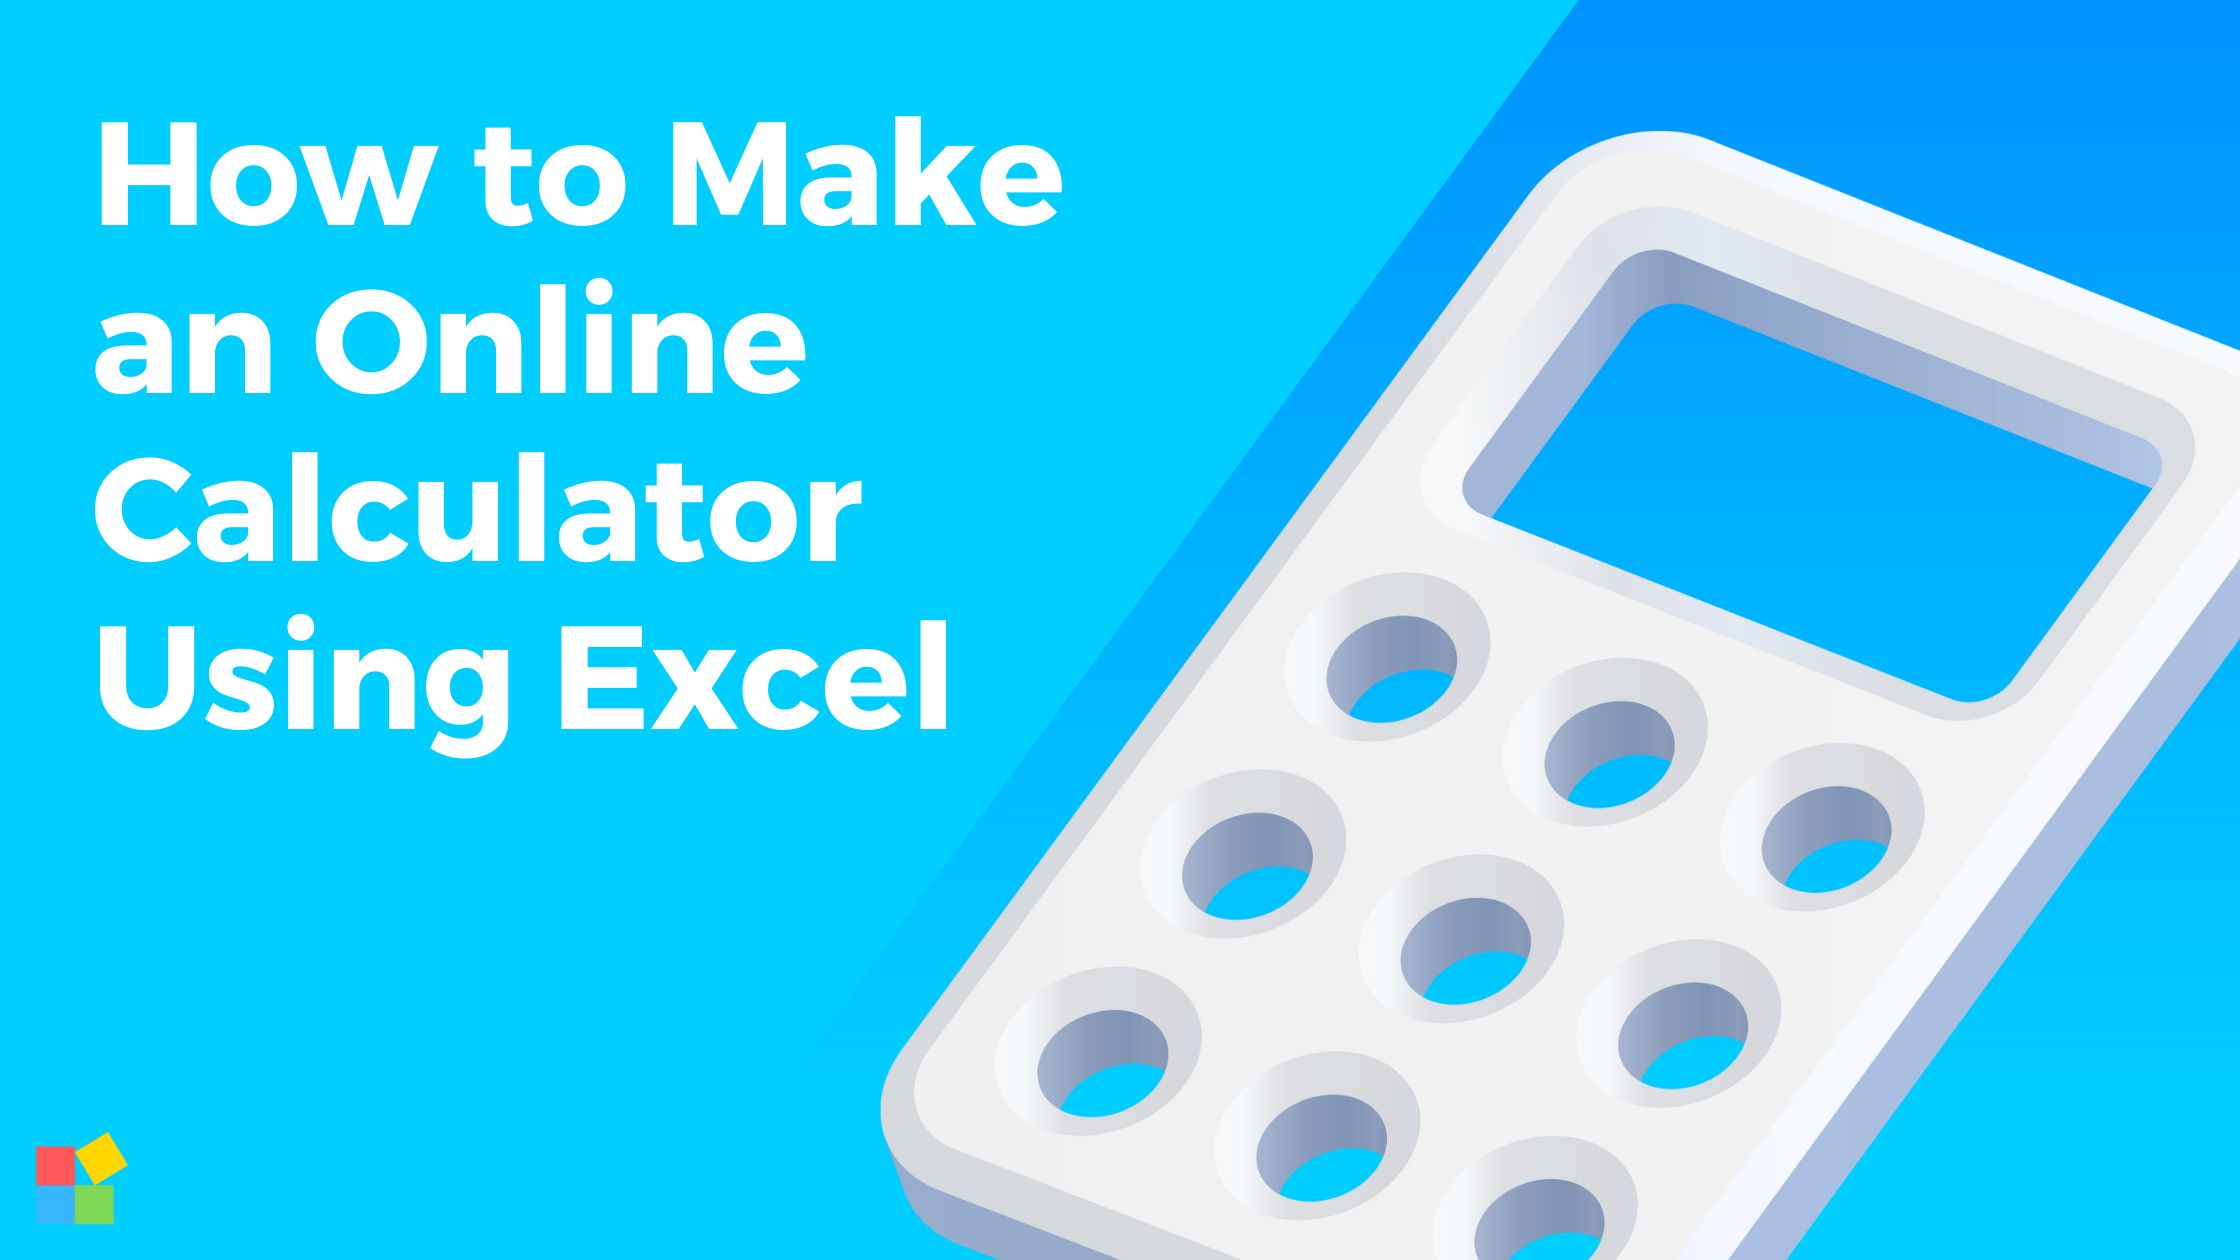 Create Online Calculators with Excel - SpreadsheetConverter